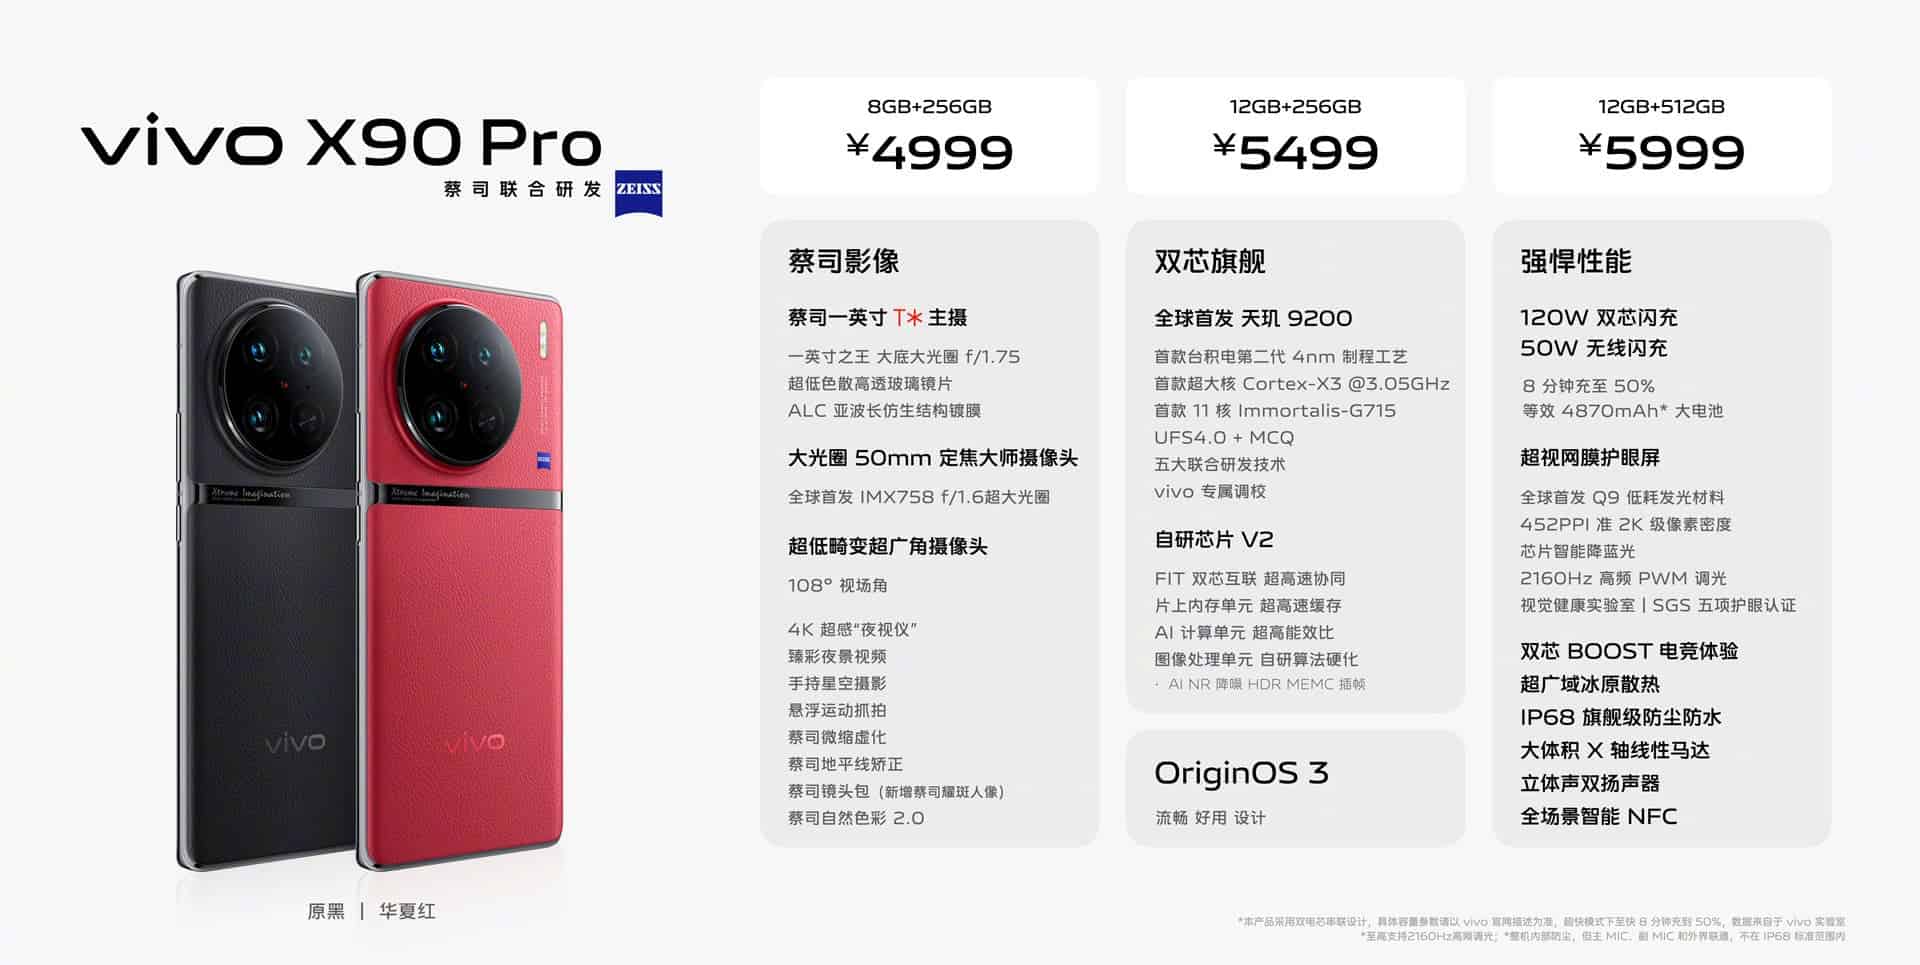 VIVO X90 Pro Price